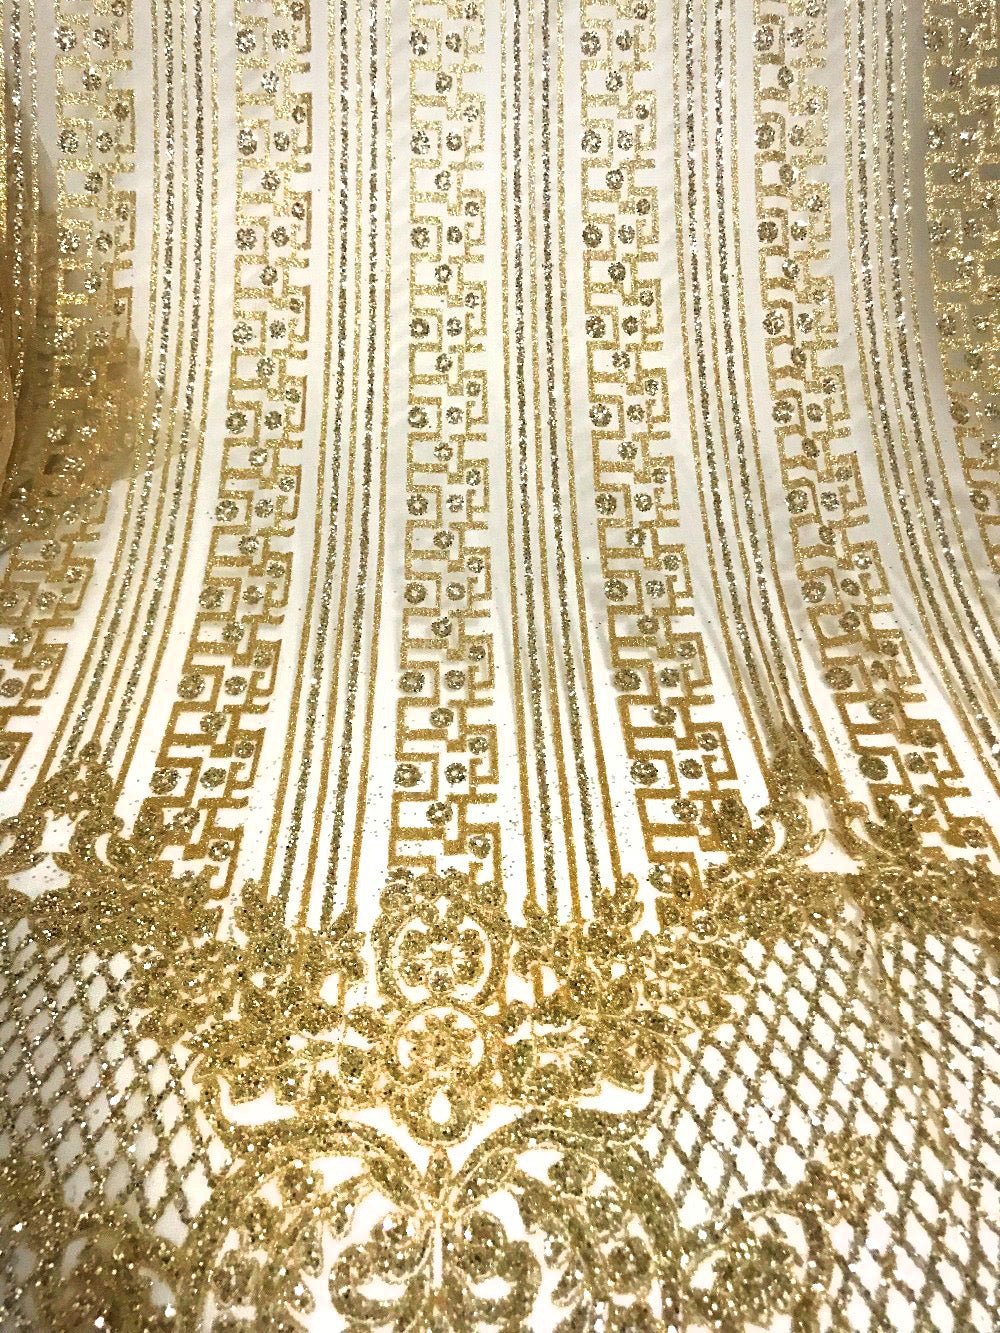 Charlotte METALLIC GOLD Geometric Glitter Mesh Tulle Mesh Lace Dress Fabric / Sold by the Yard - Classic & Modern